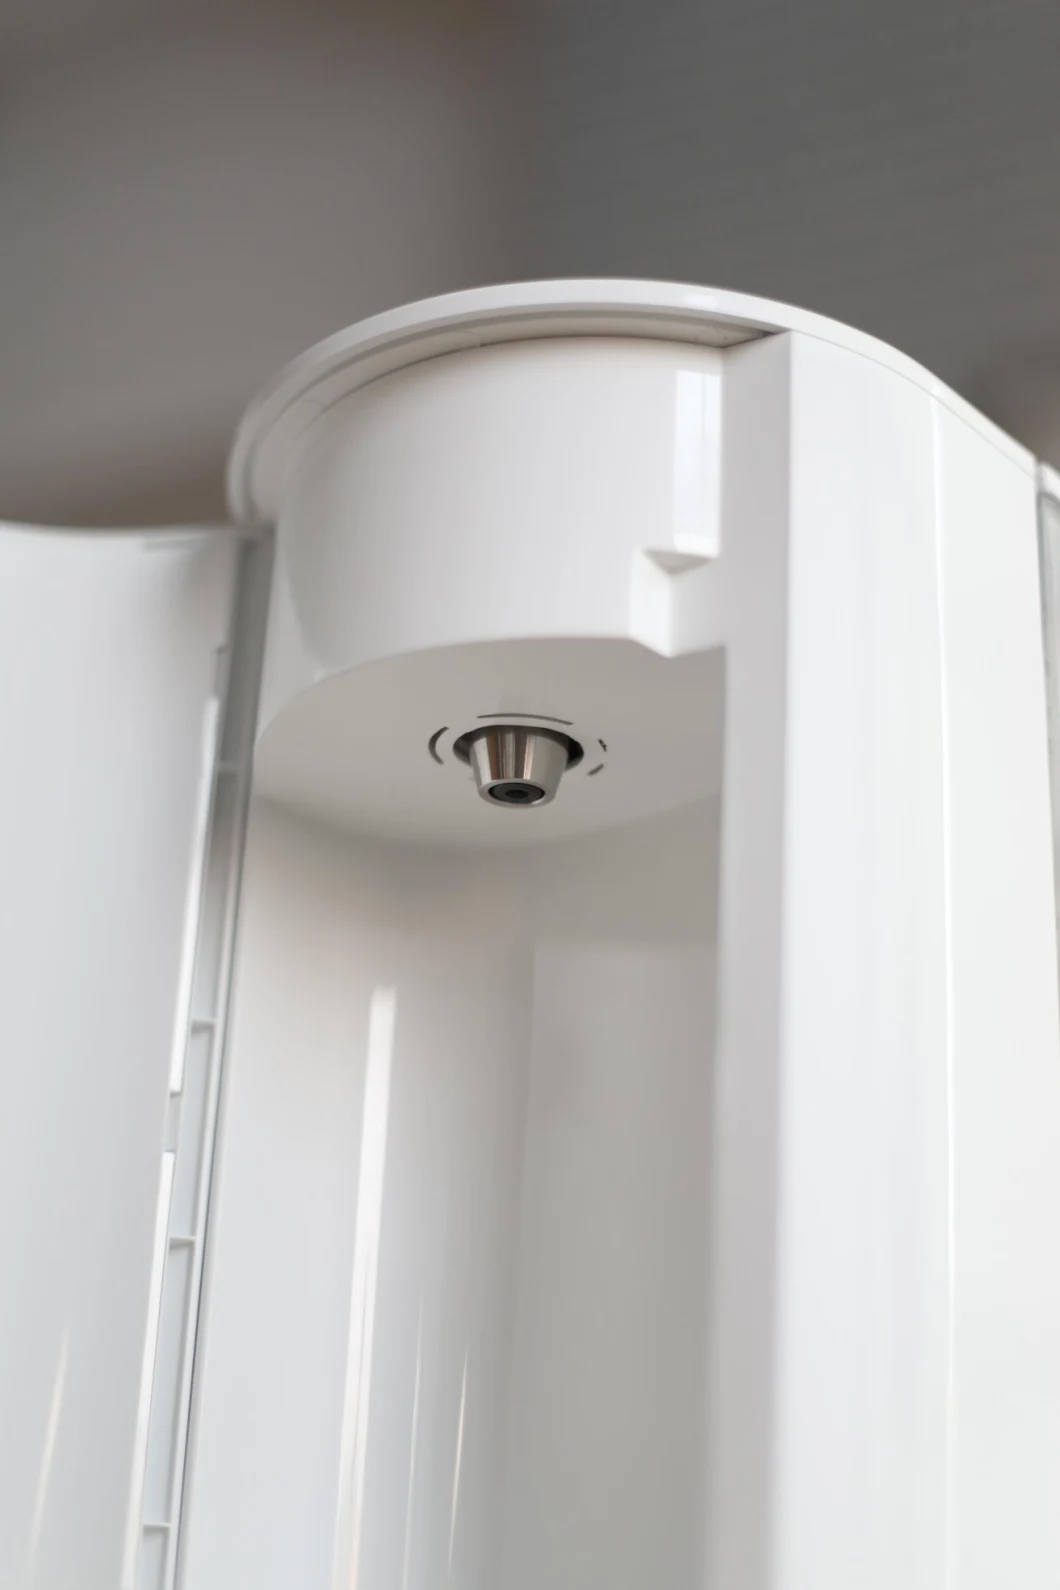 Hot or Warm Water Dispenser for Milk Power